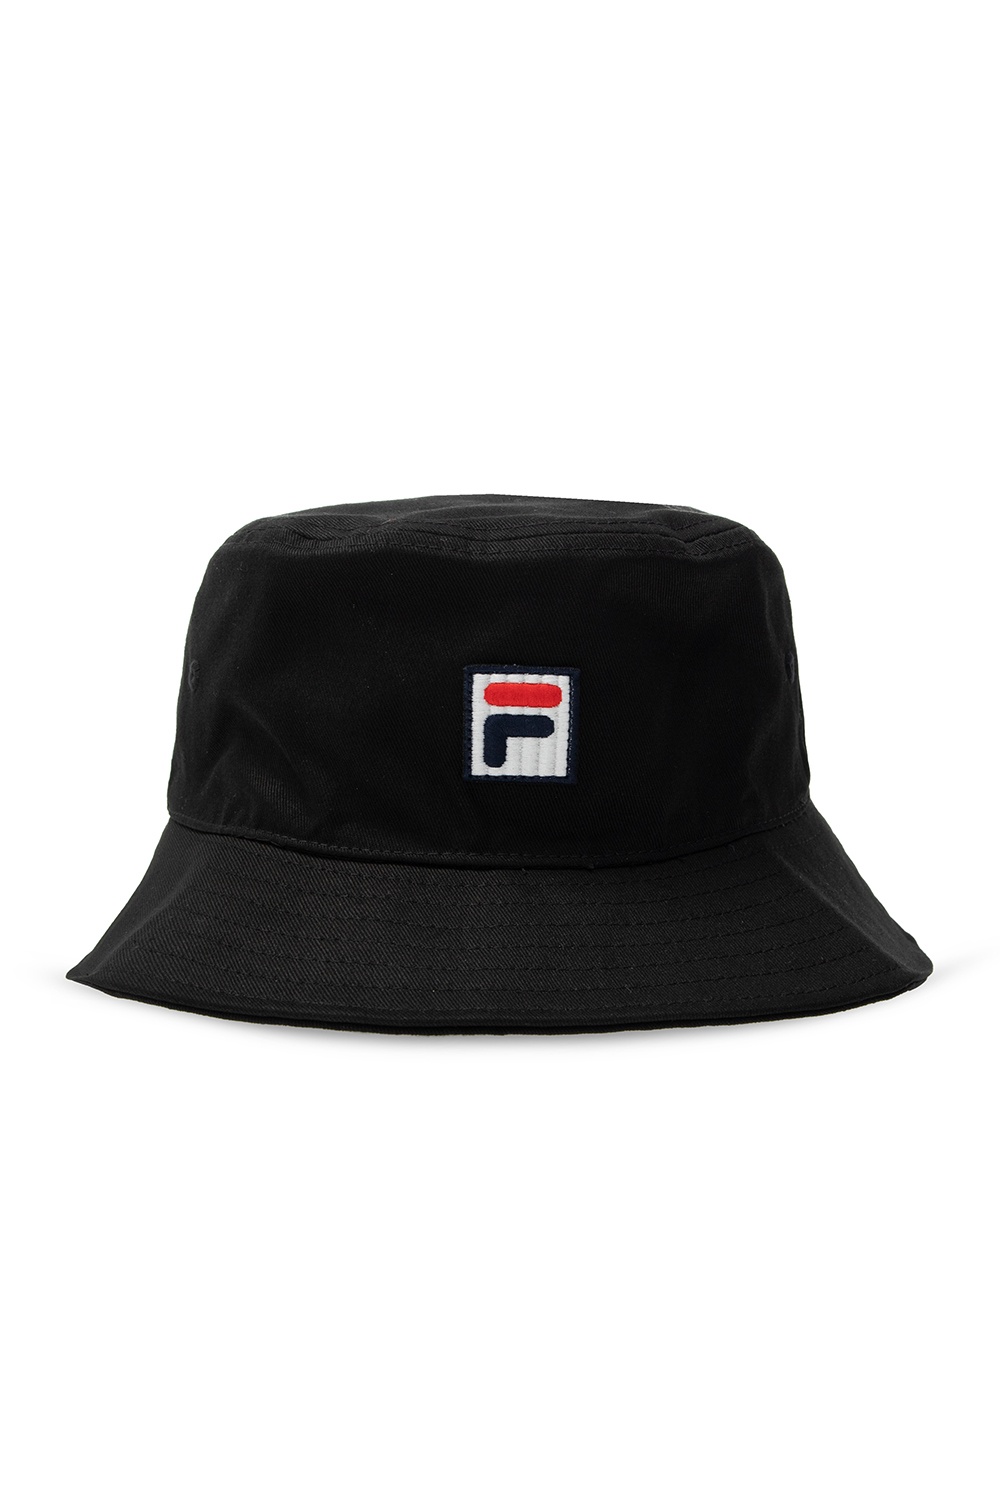 Hat with logo Fila - Vitkac Singapore